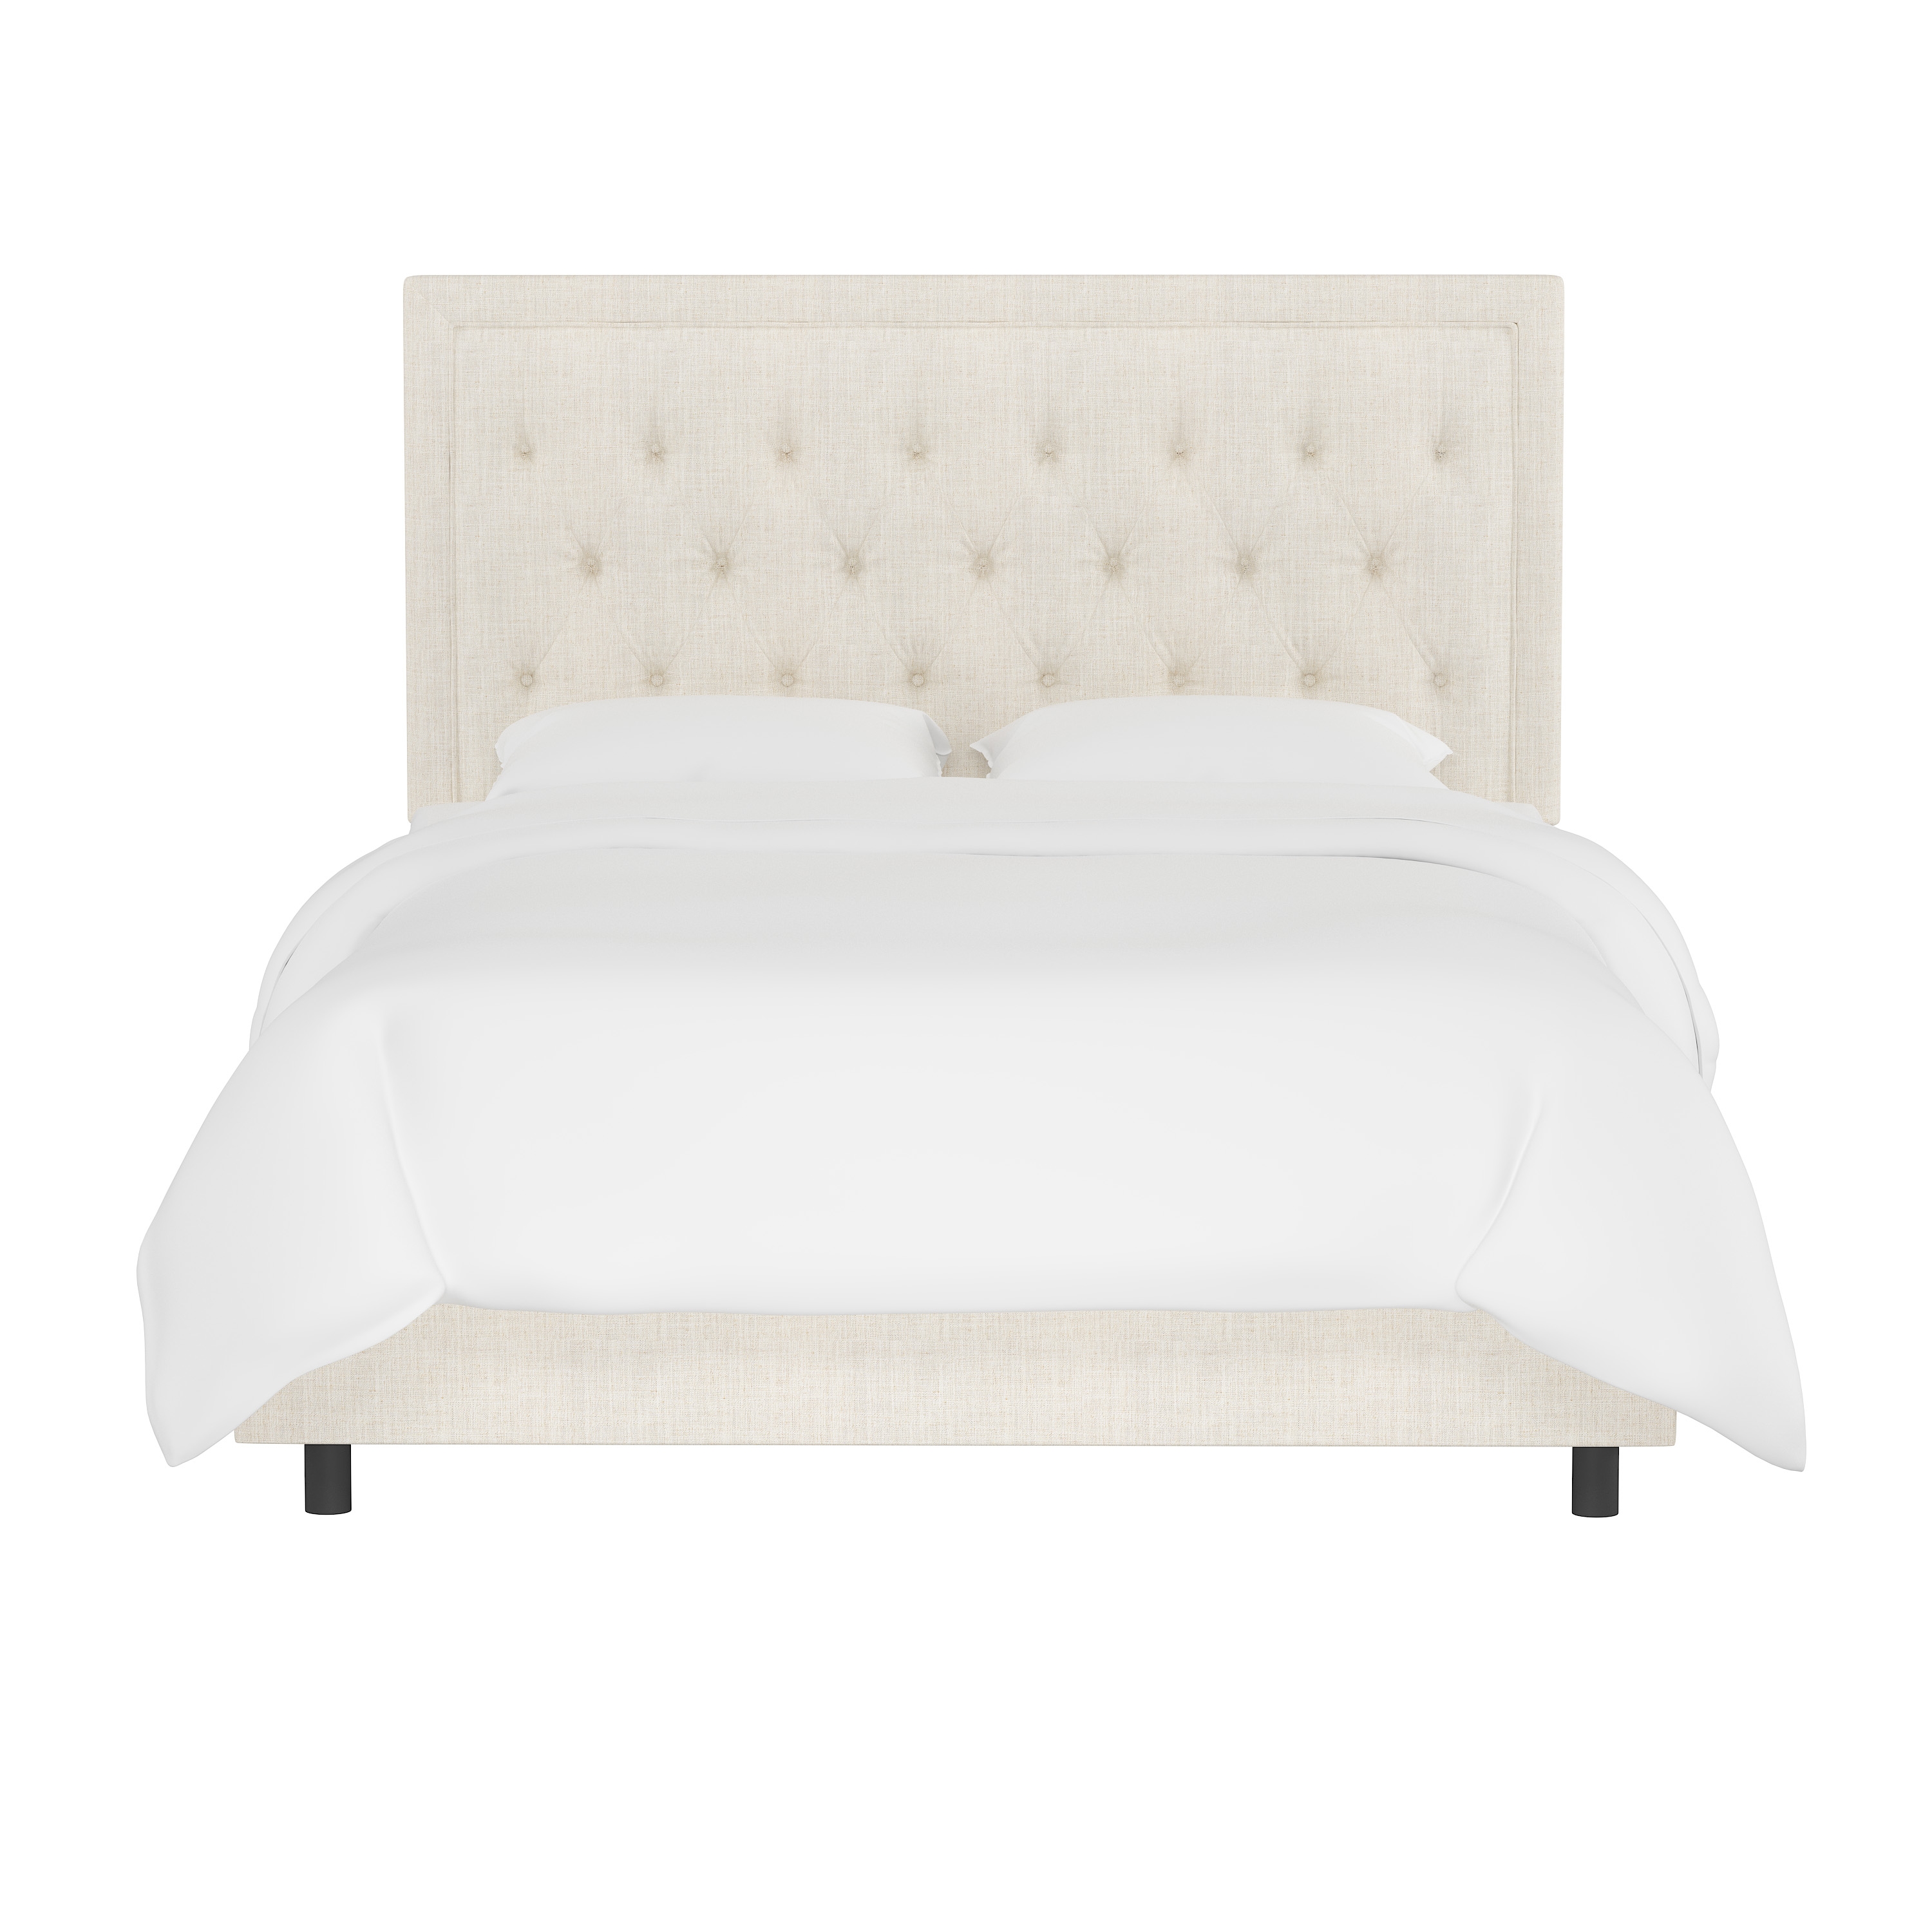 Lafayette Bed, Queen, Talc - Image 1